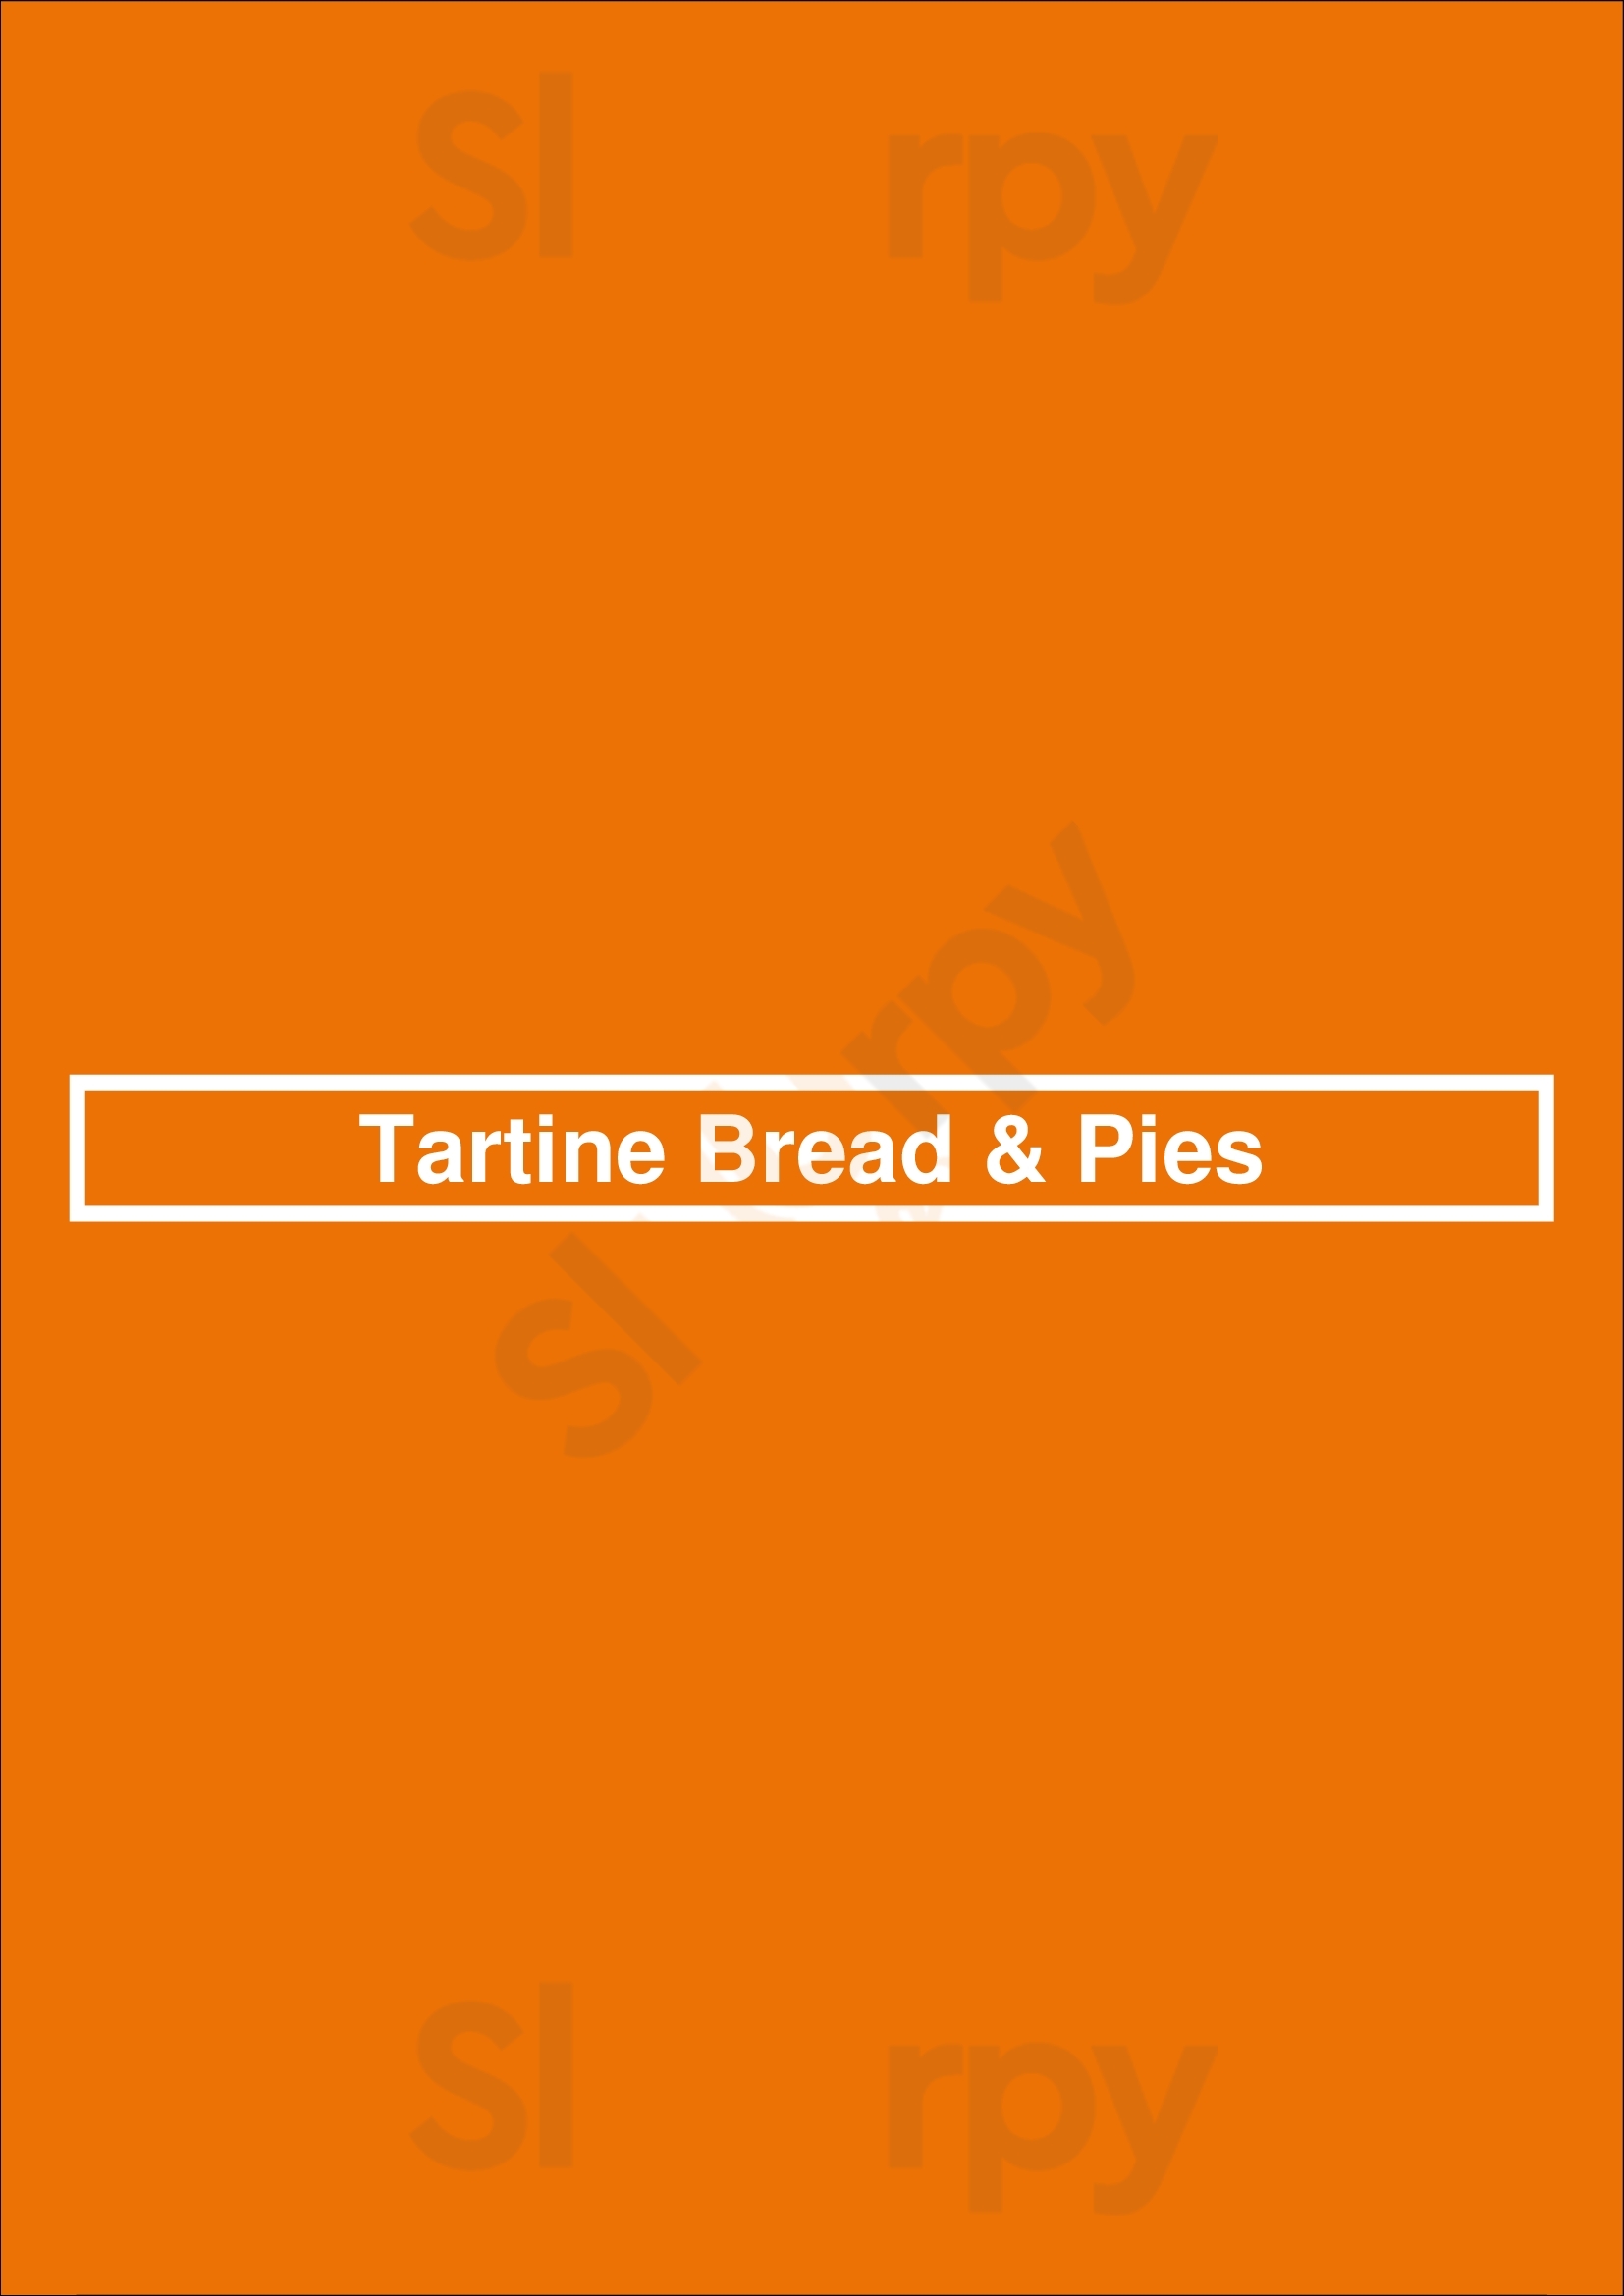 Tartine Bread & Pies Vancouver Menu - 1